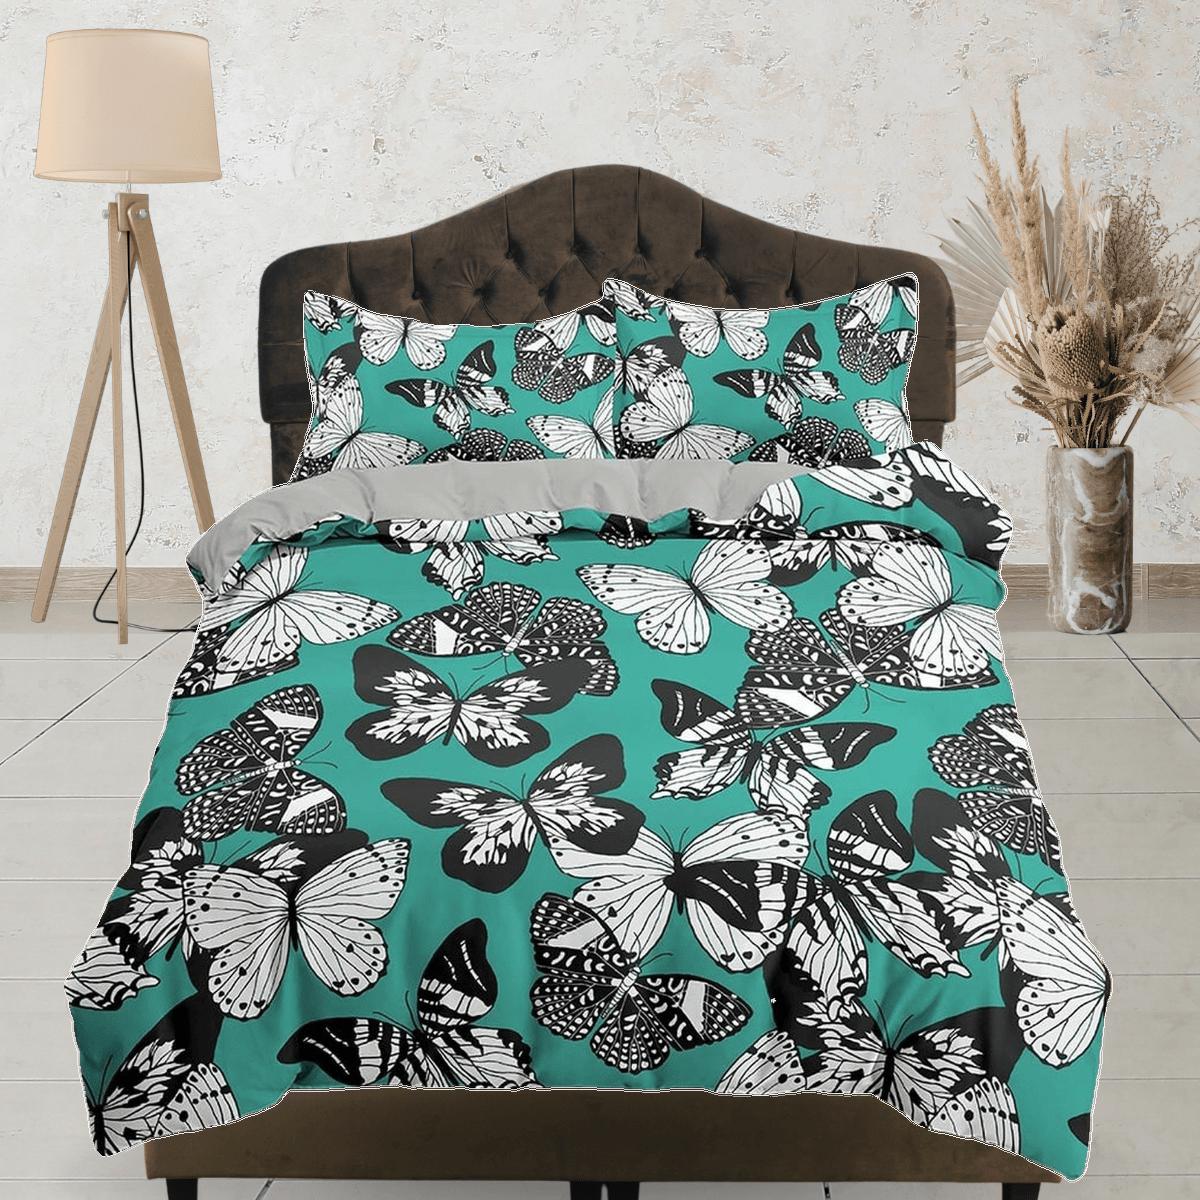 daintyduvet Black and white butterfly bedding teal green duvet cover dorm bedding, full size adult duvet king queen twin, nursery toddler bedding